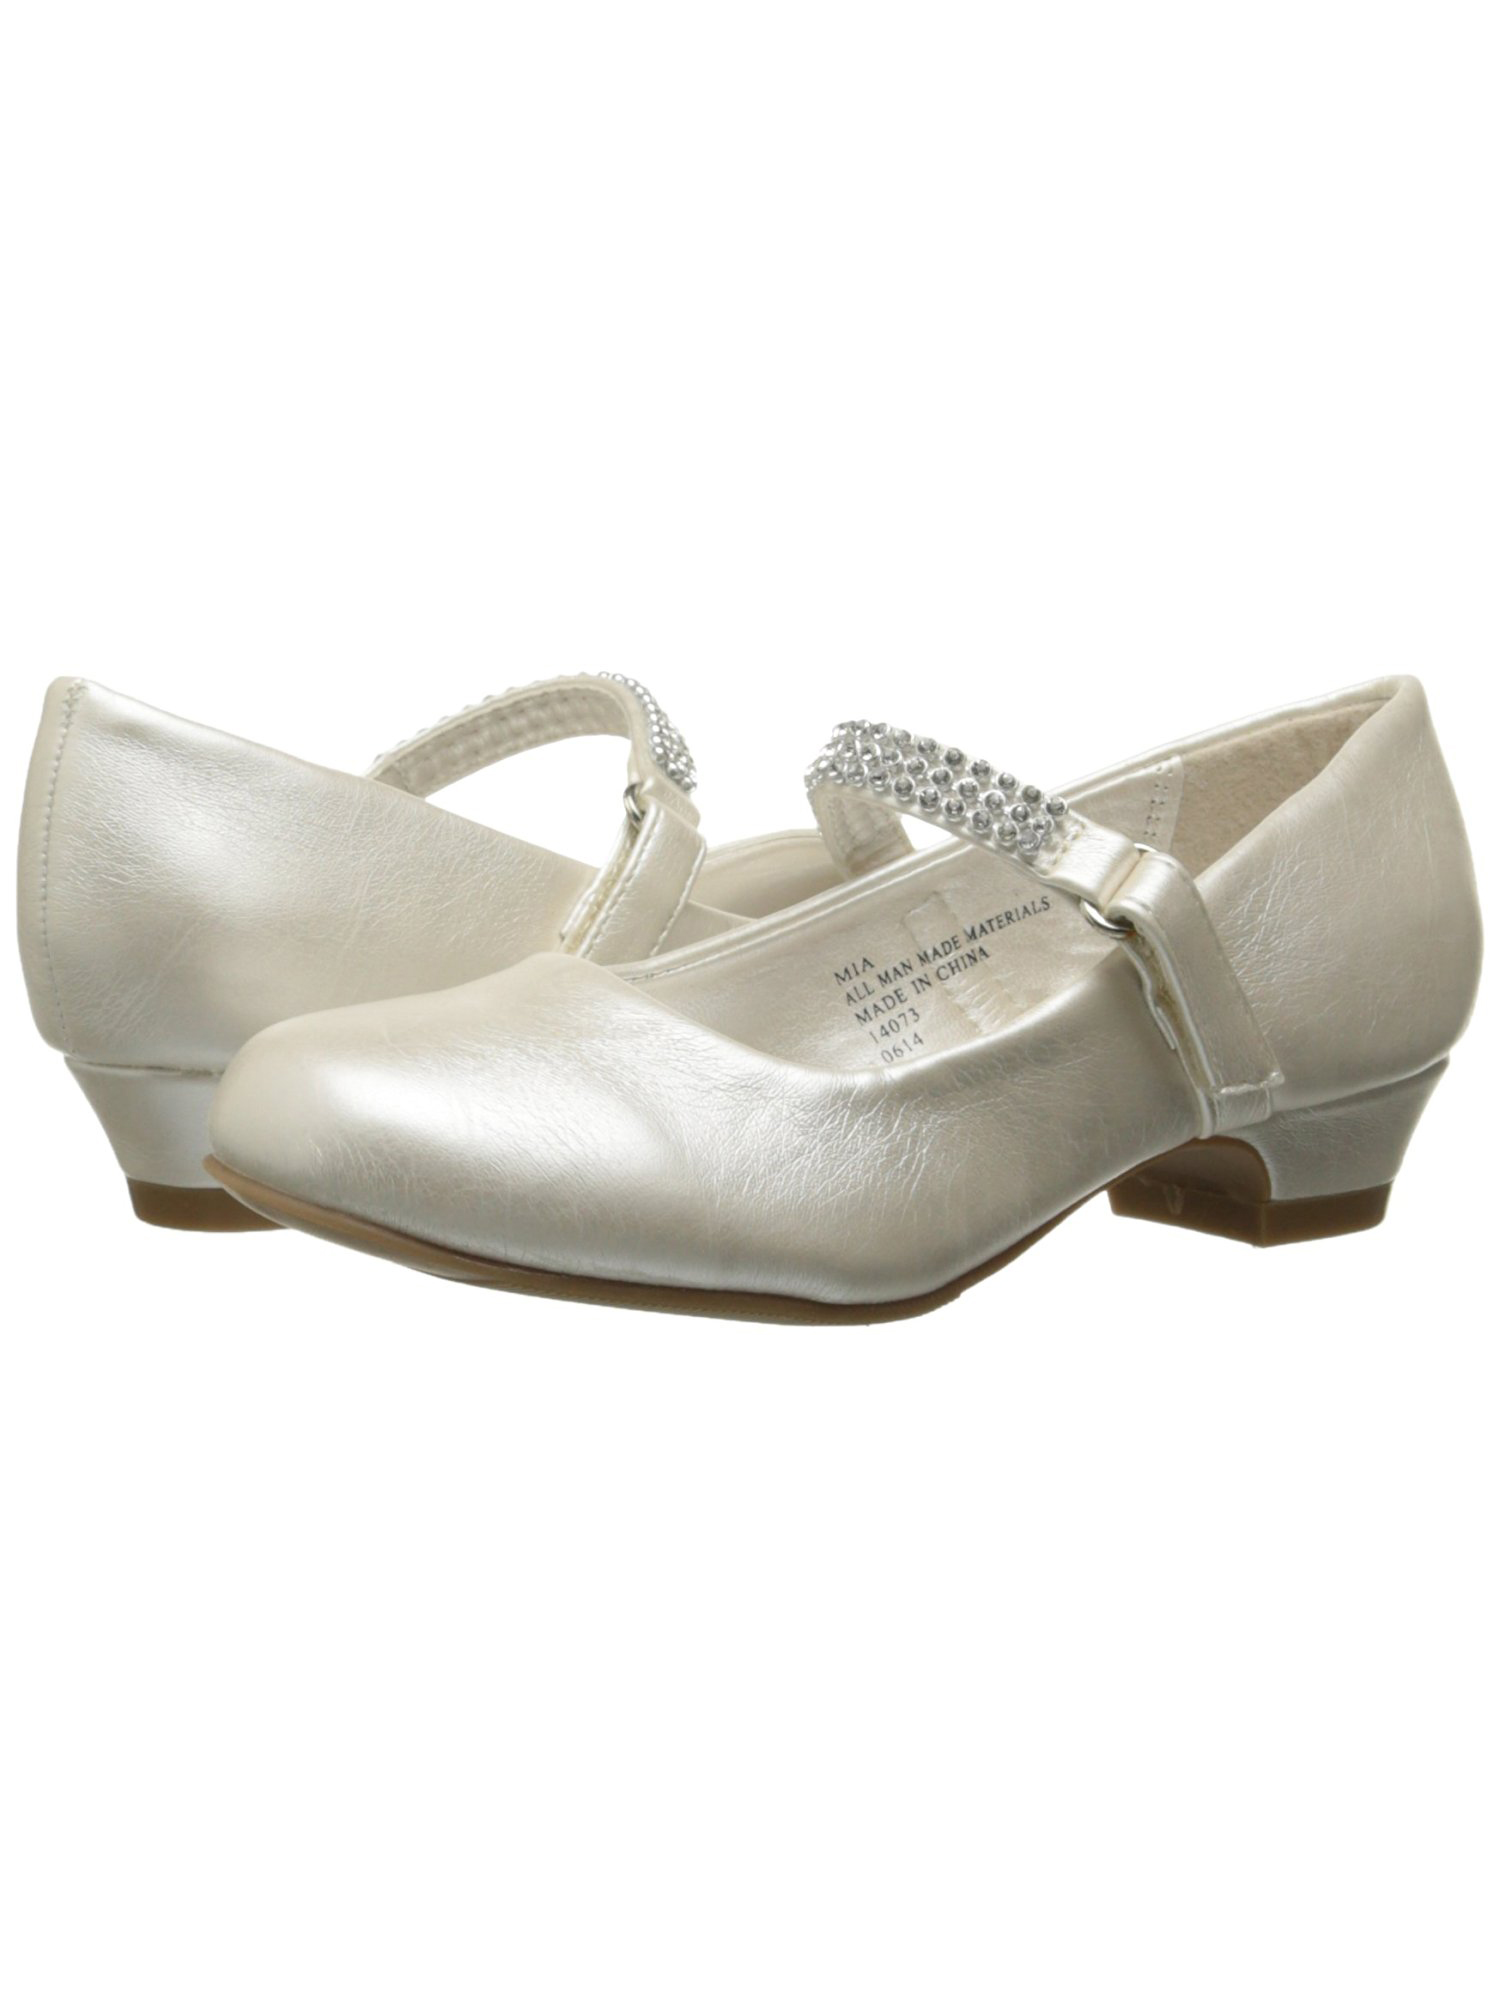 Girls Low Heel Dress Shoe With Rhinestone Strap (3, White)